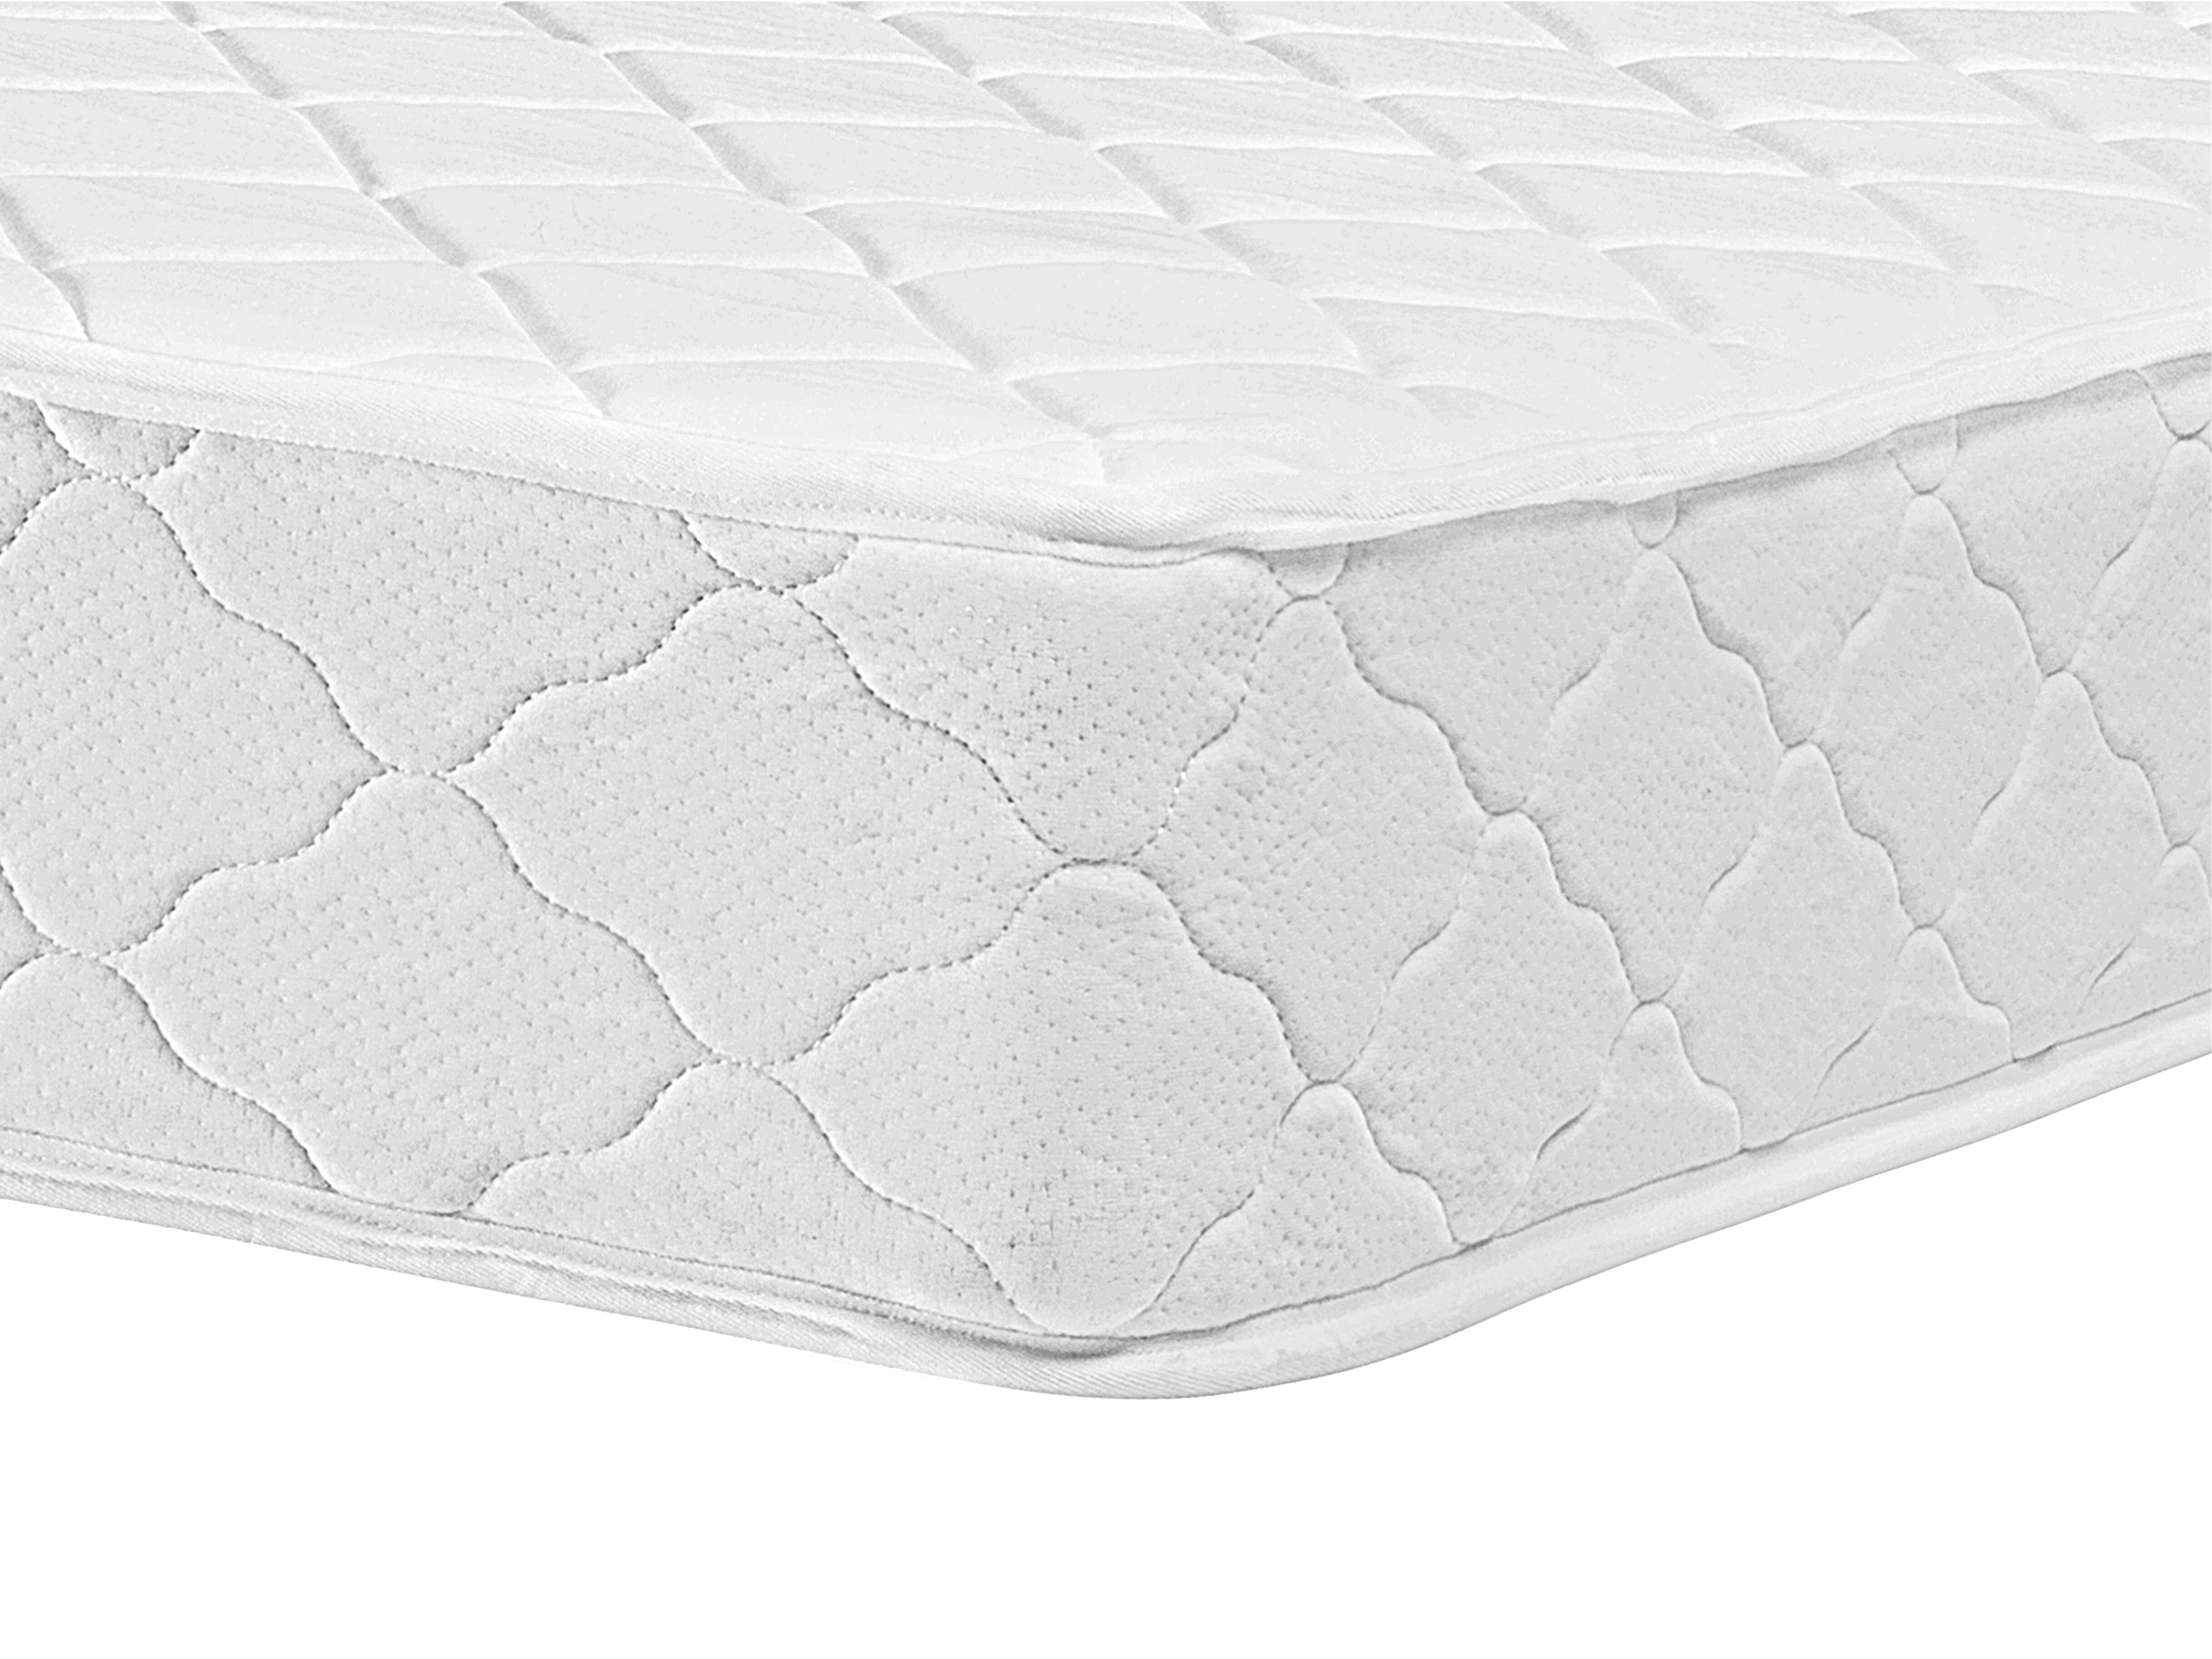 firm-mattress-the-9-best-firm-mattresses-of-2021-slumber-search-is